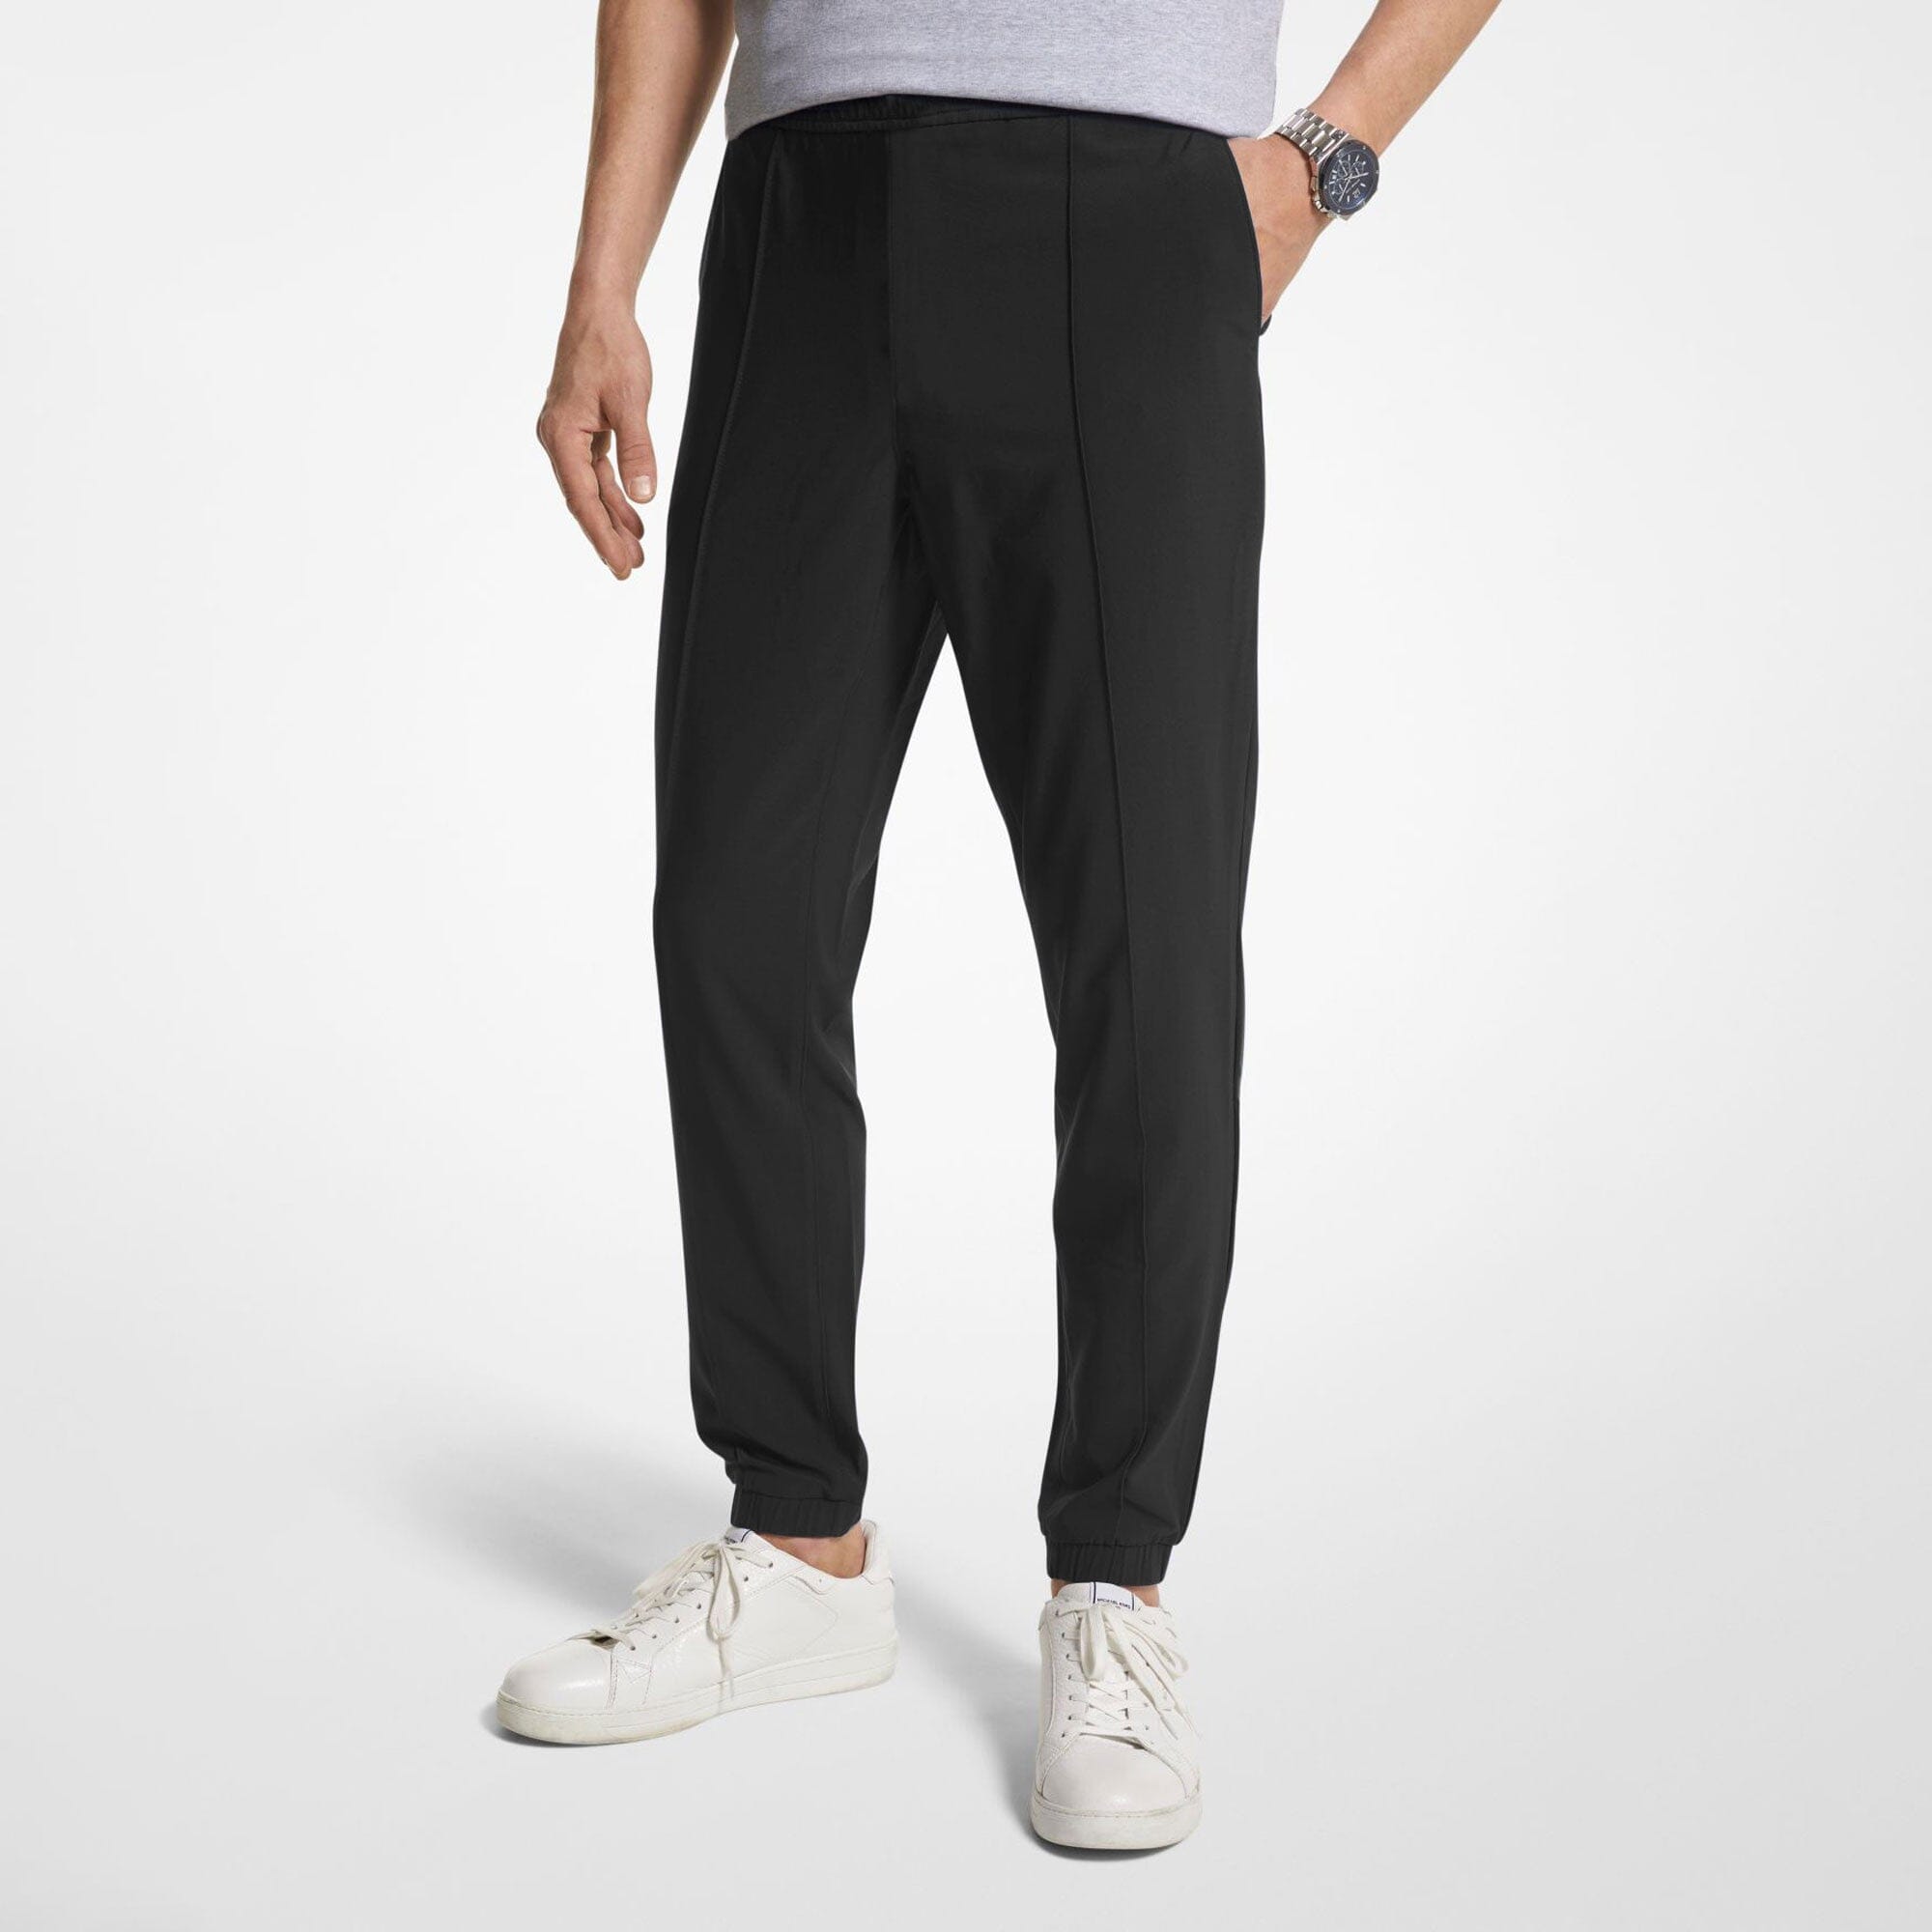 Nike Tech Fleece Blue - Clothing Trousers Men £ 197.00